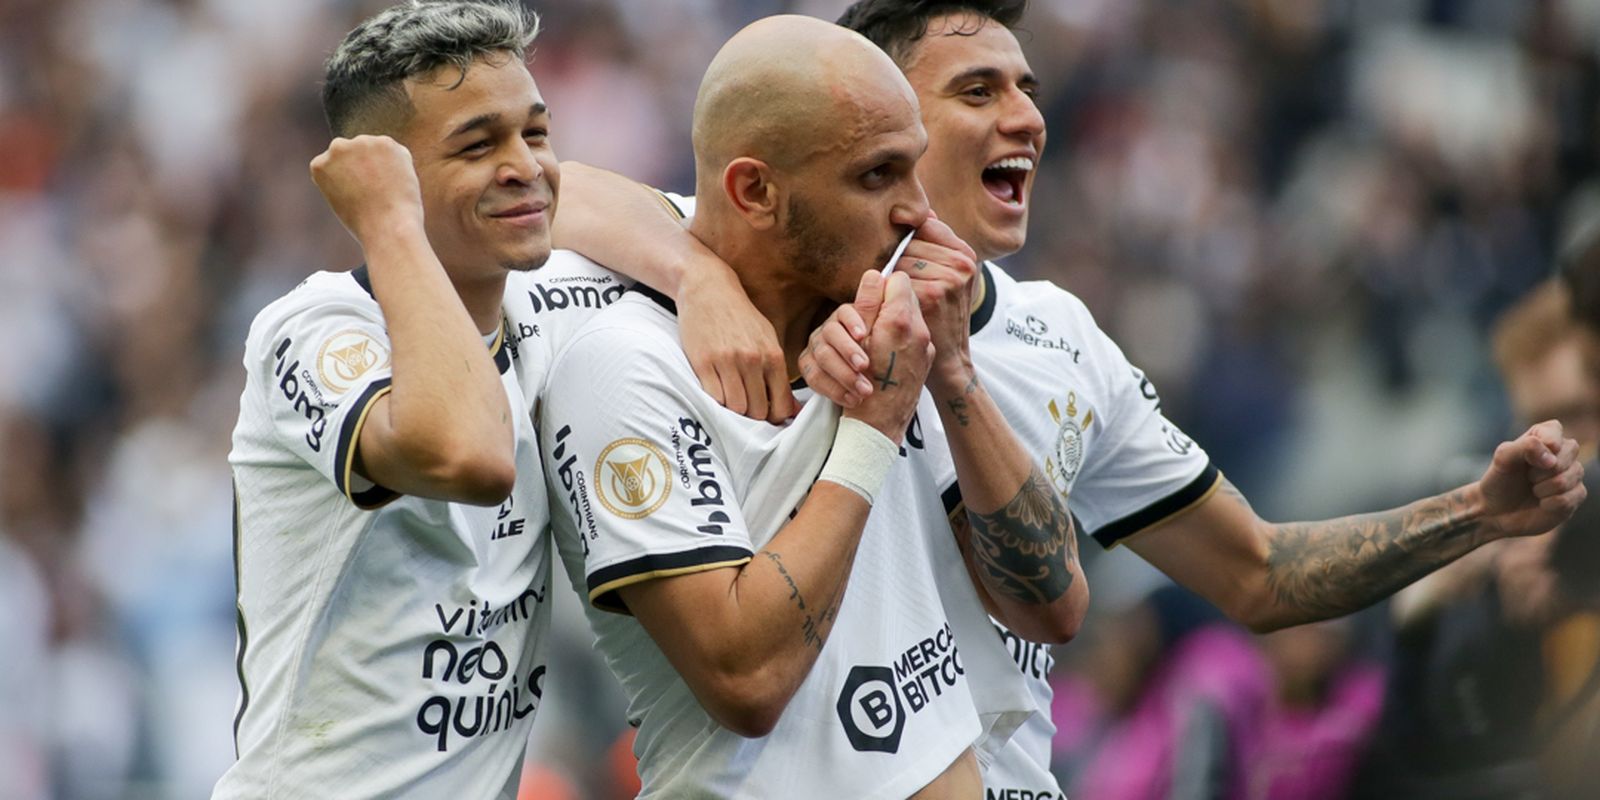 Corinthians marca no final e garante empate por 1 a 1 contra o Goiás